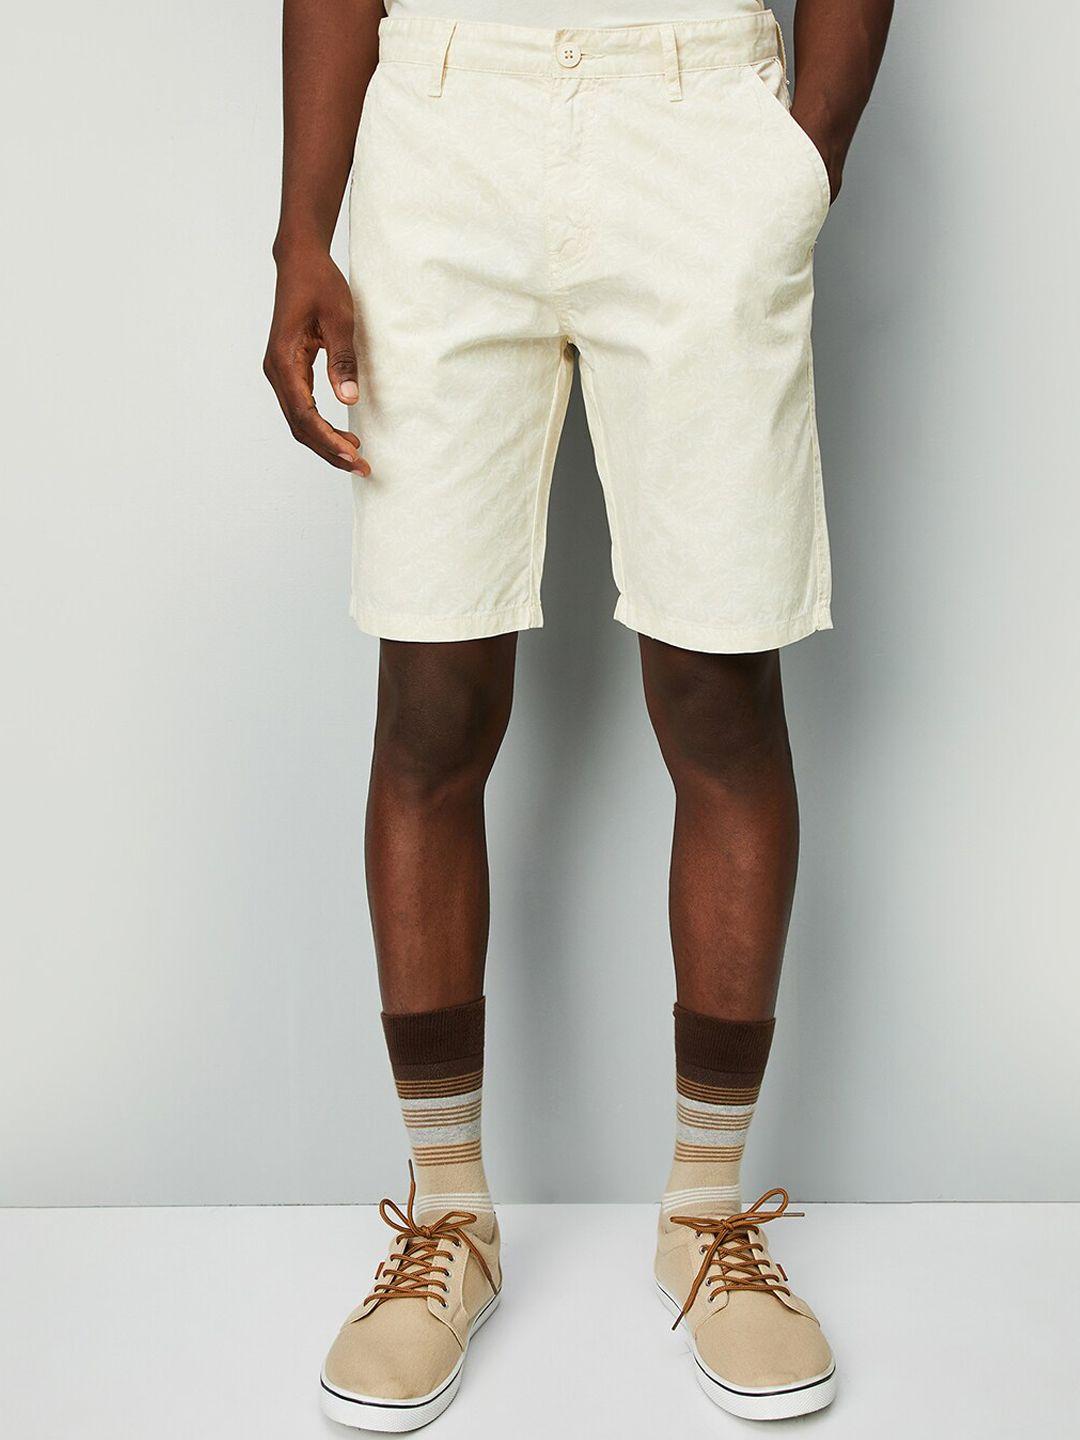 max-men-floral-printed-pure-cotton-chino-shorts